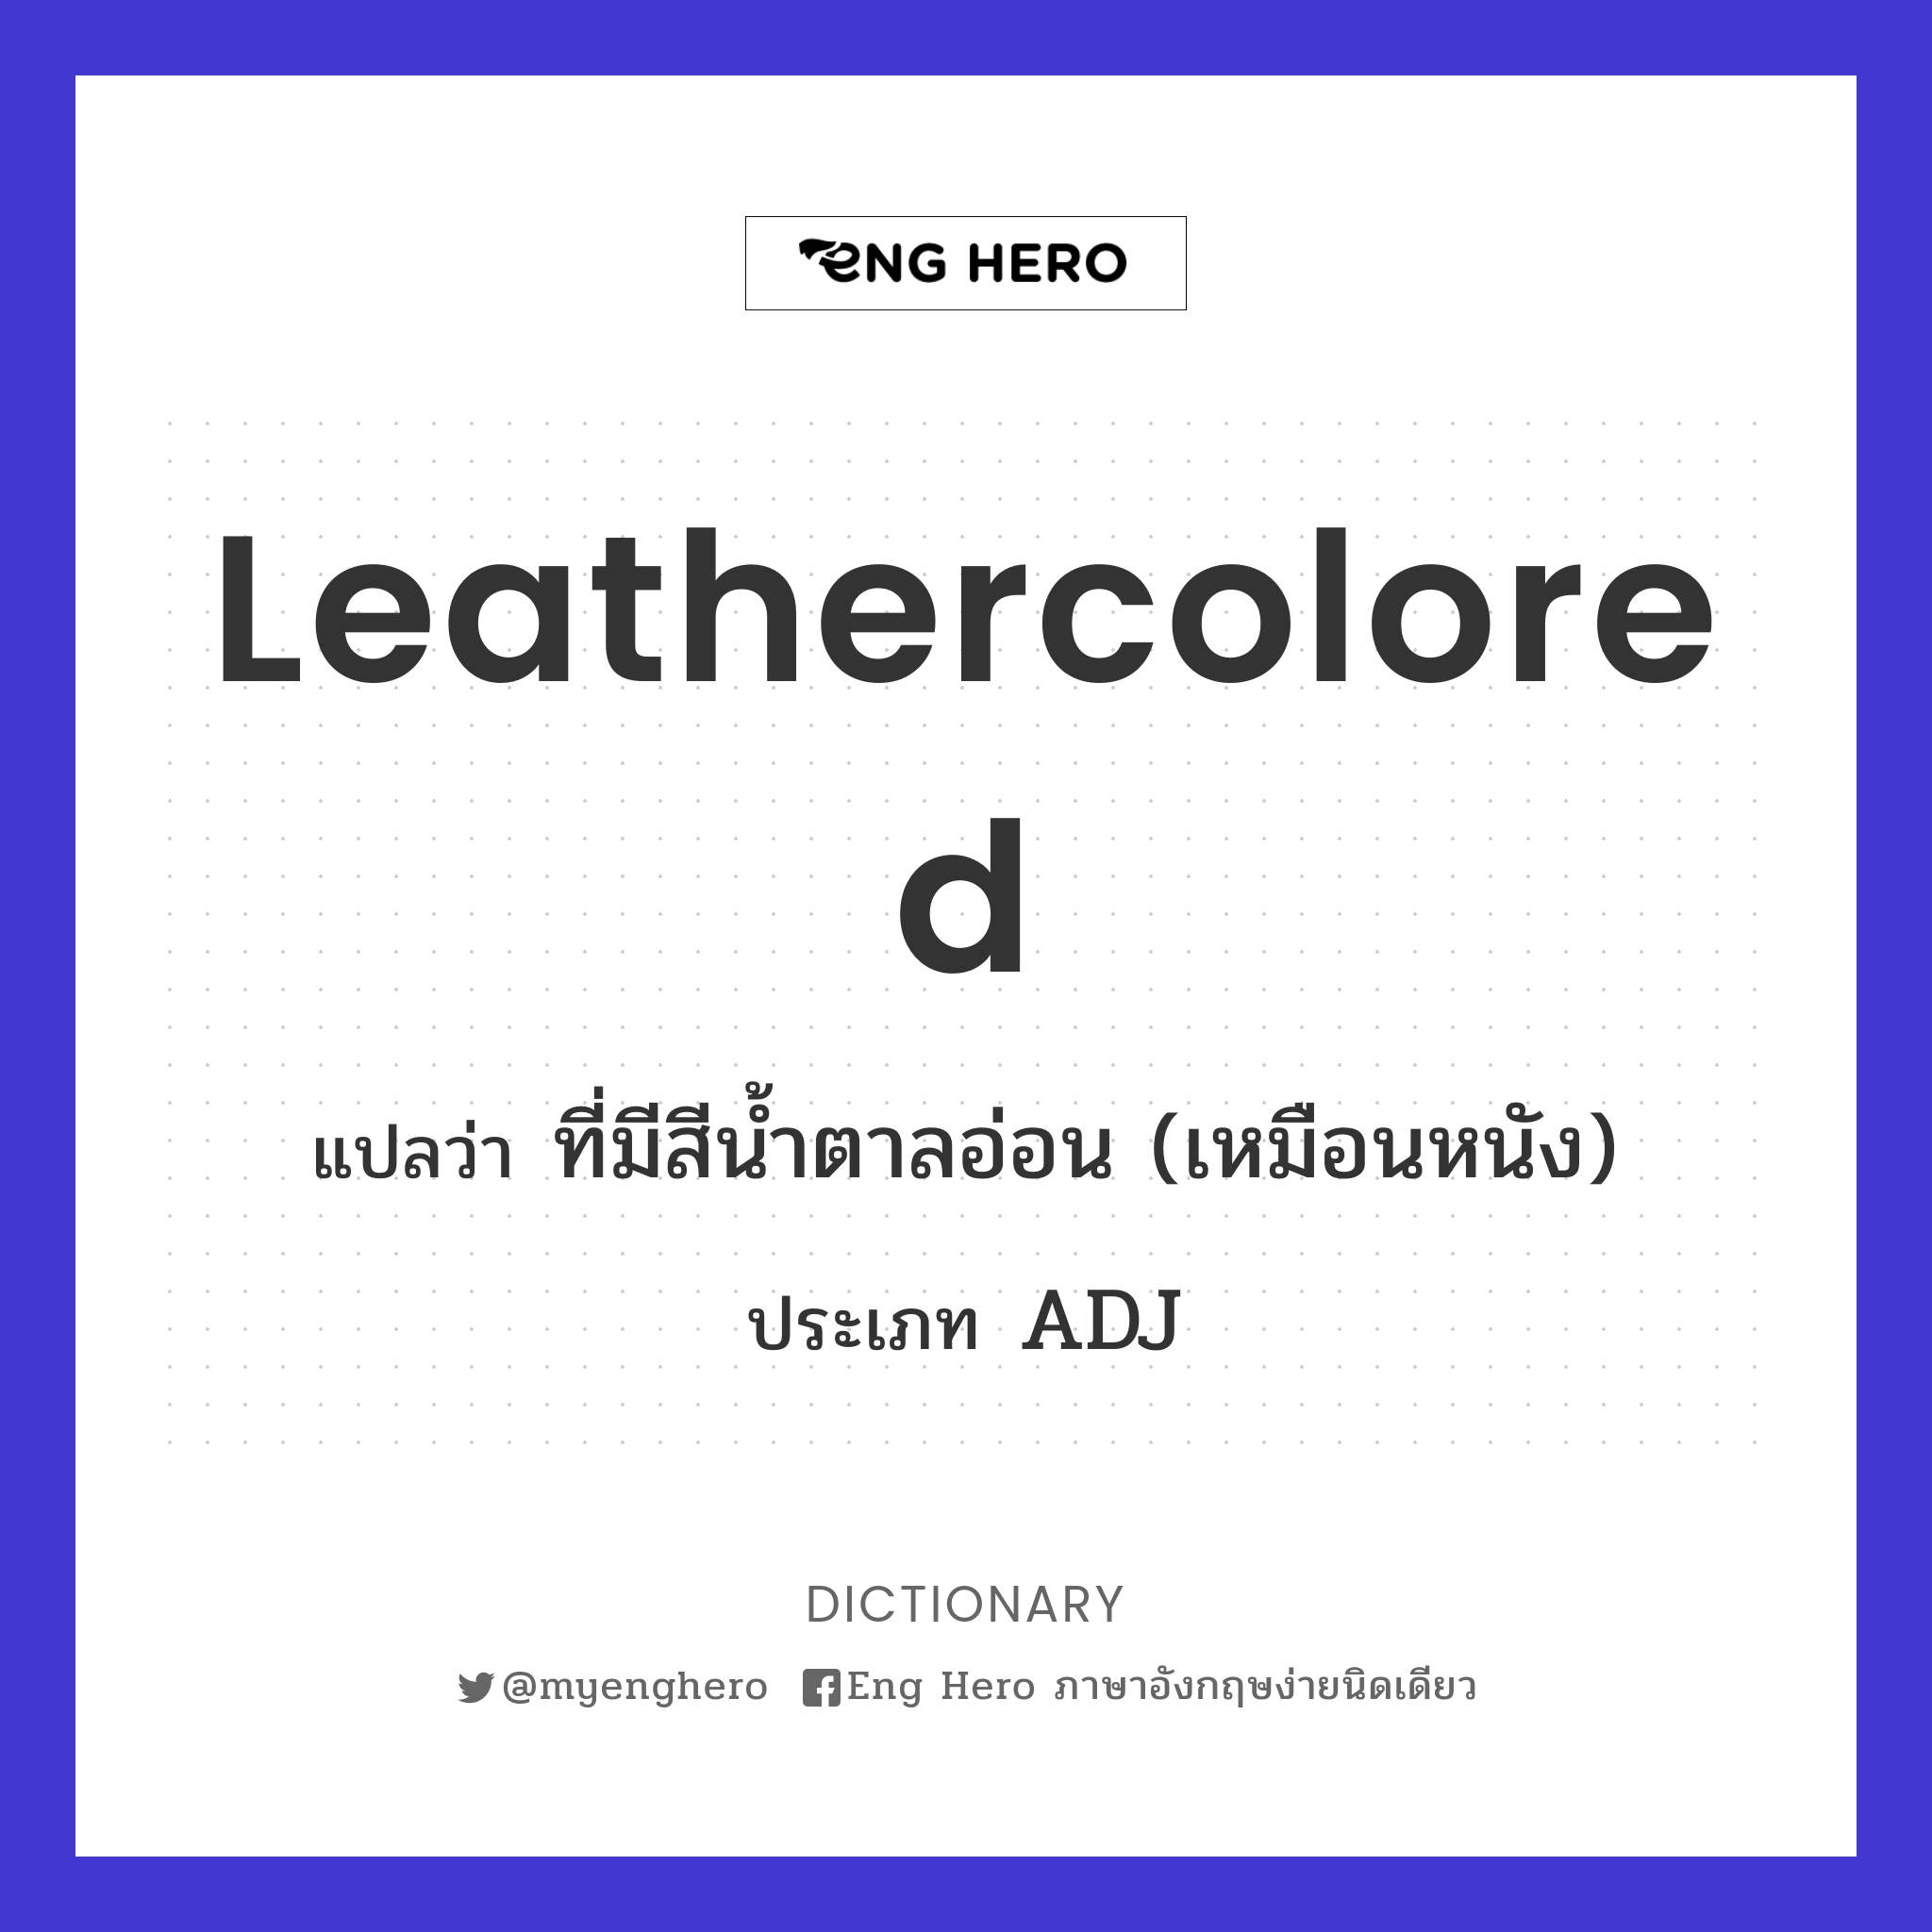 leathercolored